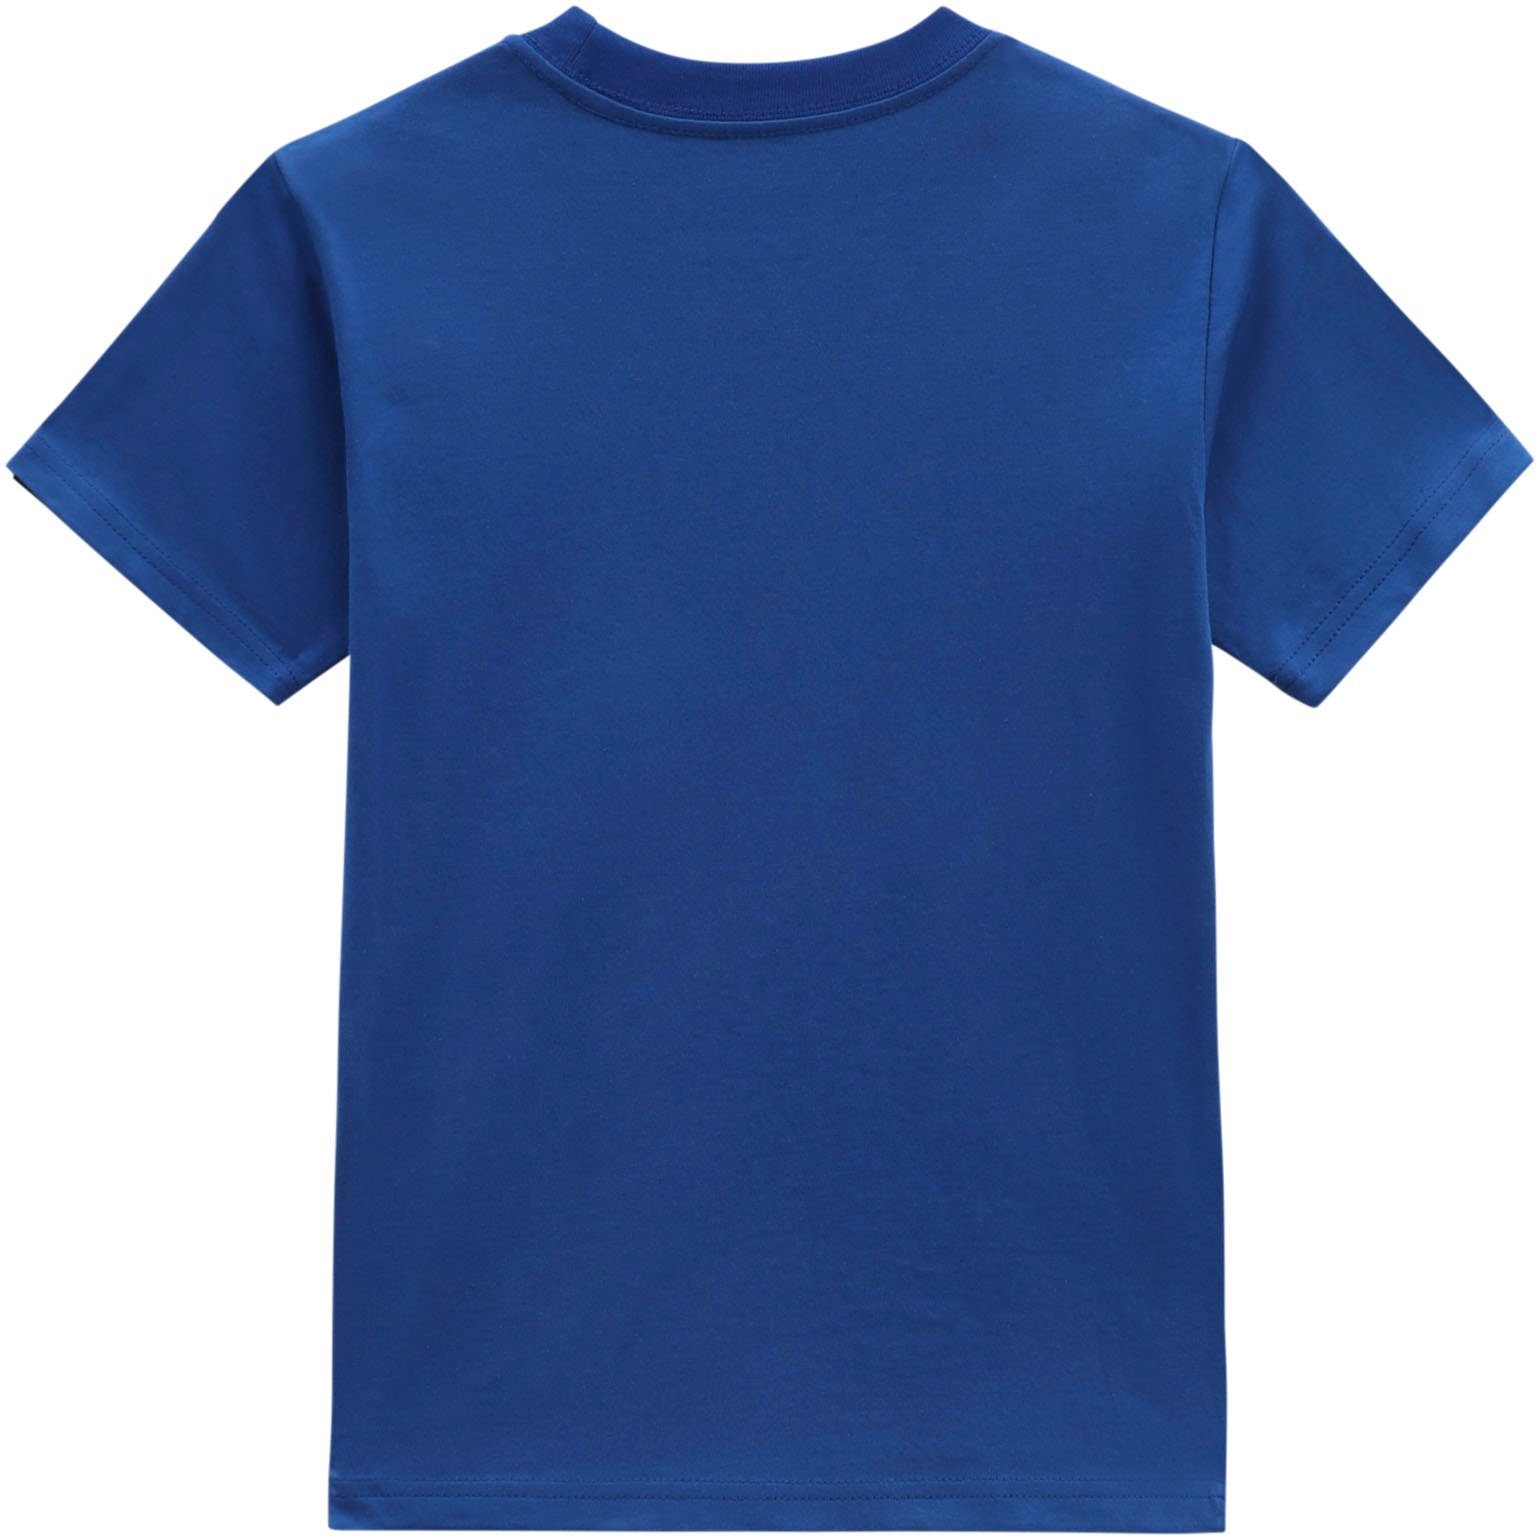 Vans T-Shirt BY white CLASSIC KIDS blue/ VANS